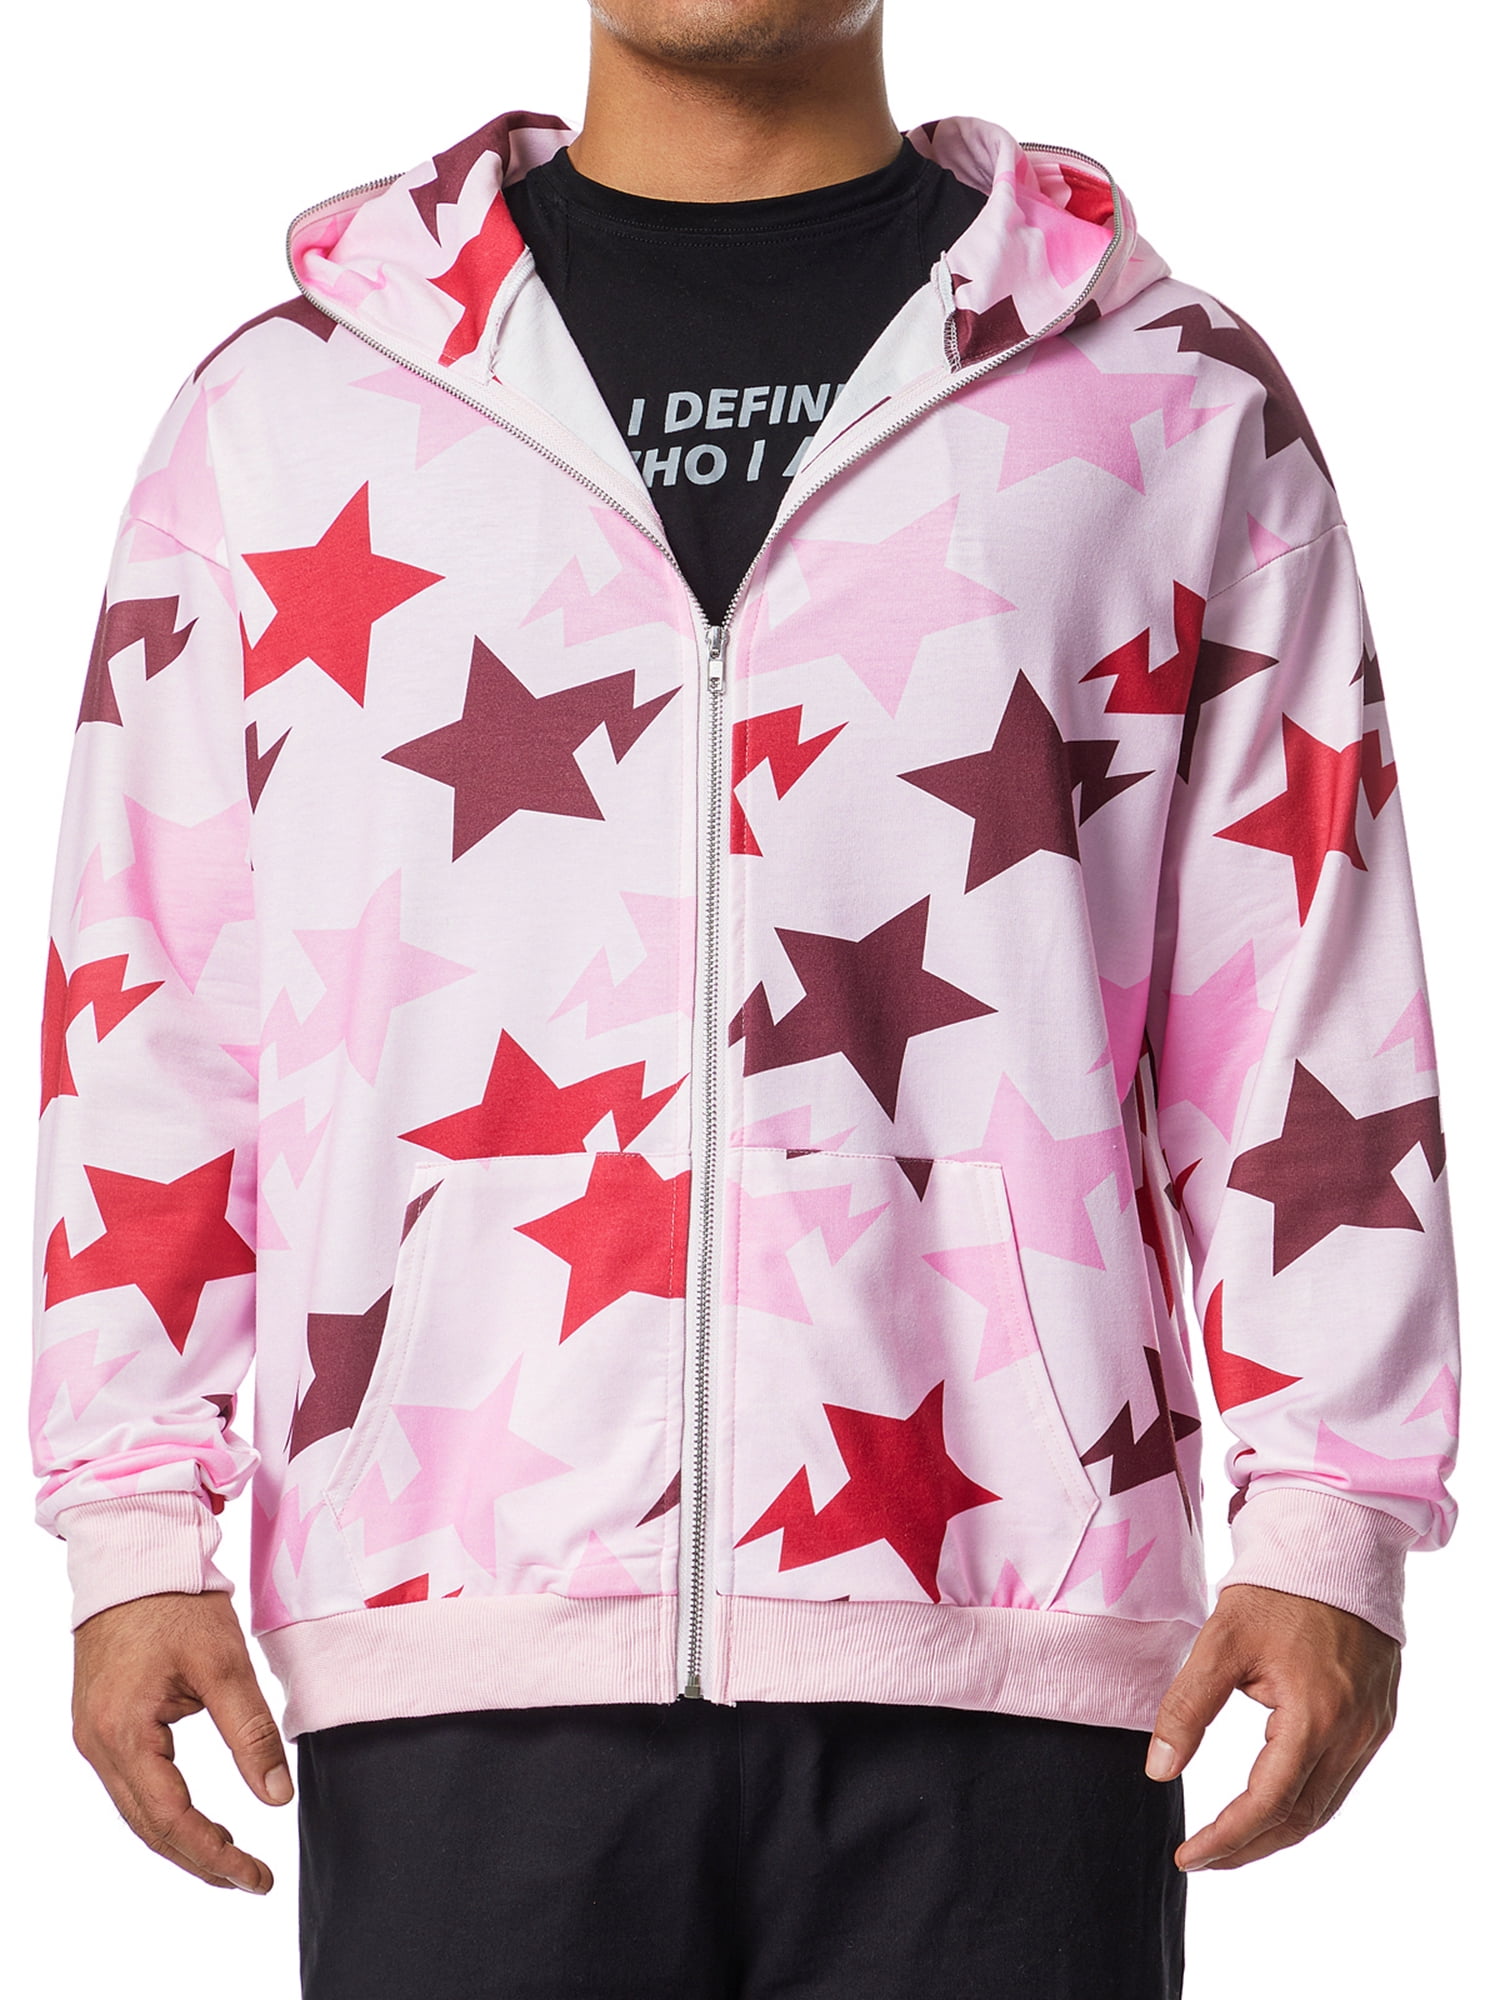 JYYYBF Hoodie Oversized Sweatshirt for Men Full Zip Up Star Jacket Y2K Autumn Streetwear with Pocket M -